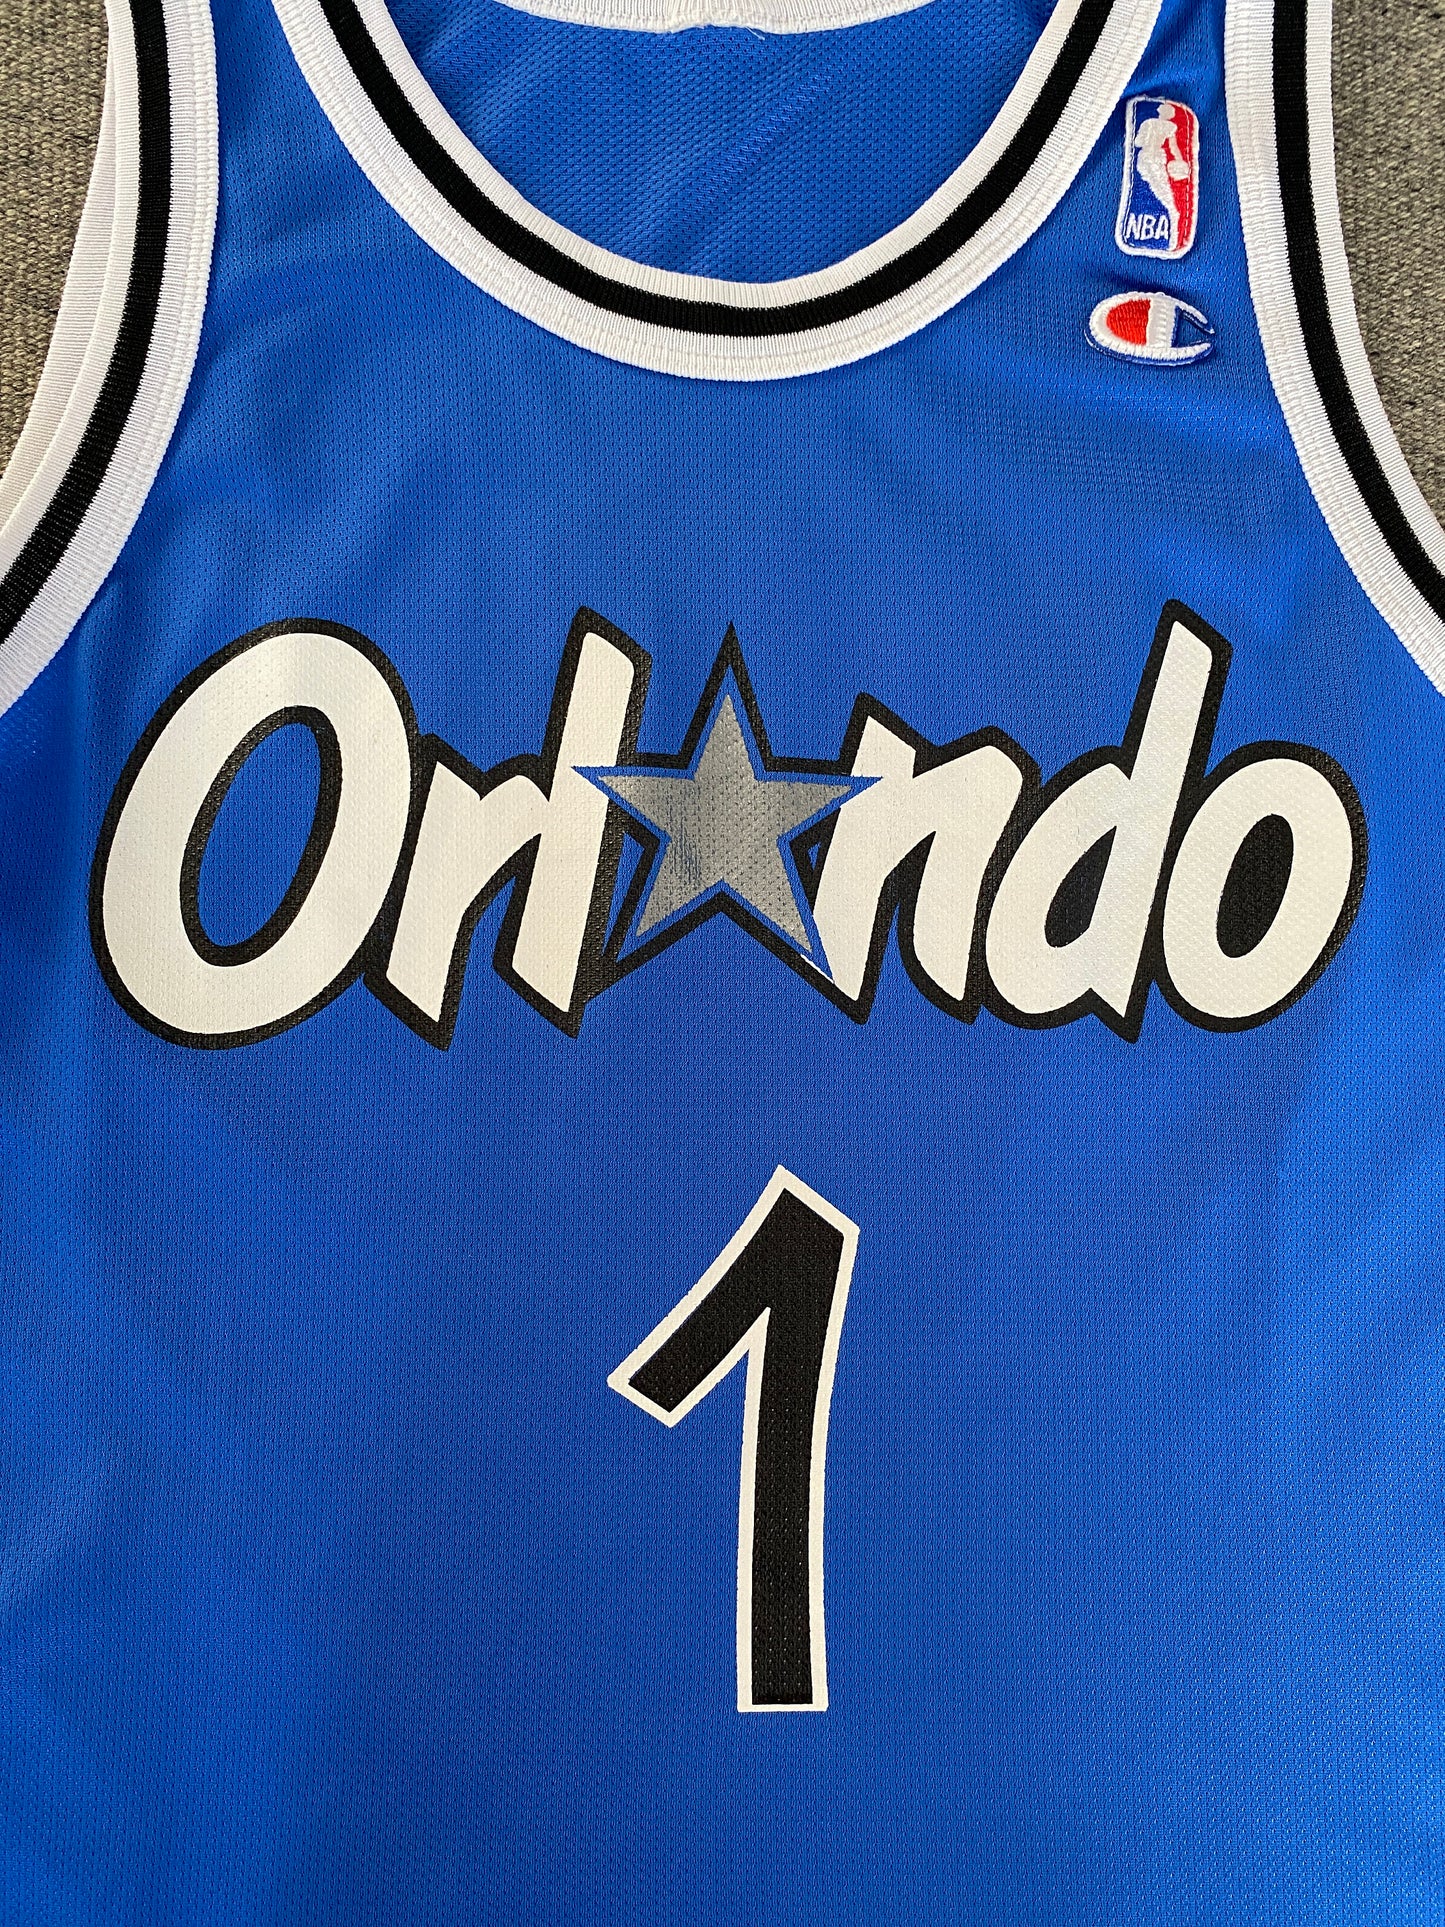 Authentic 90s Champion NBA Jersey - #1 Hardaway Orlando - Size 40